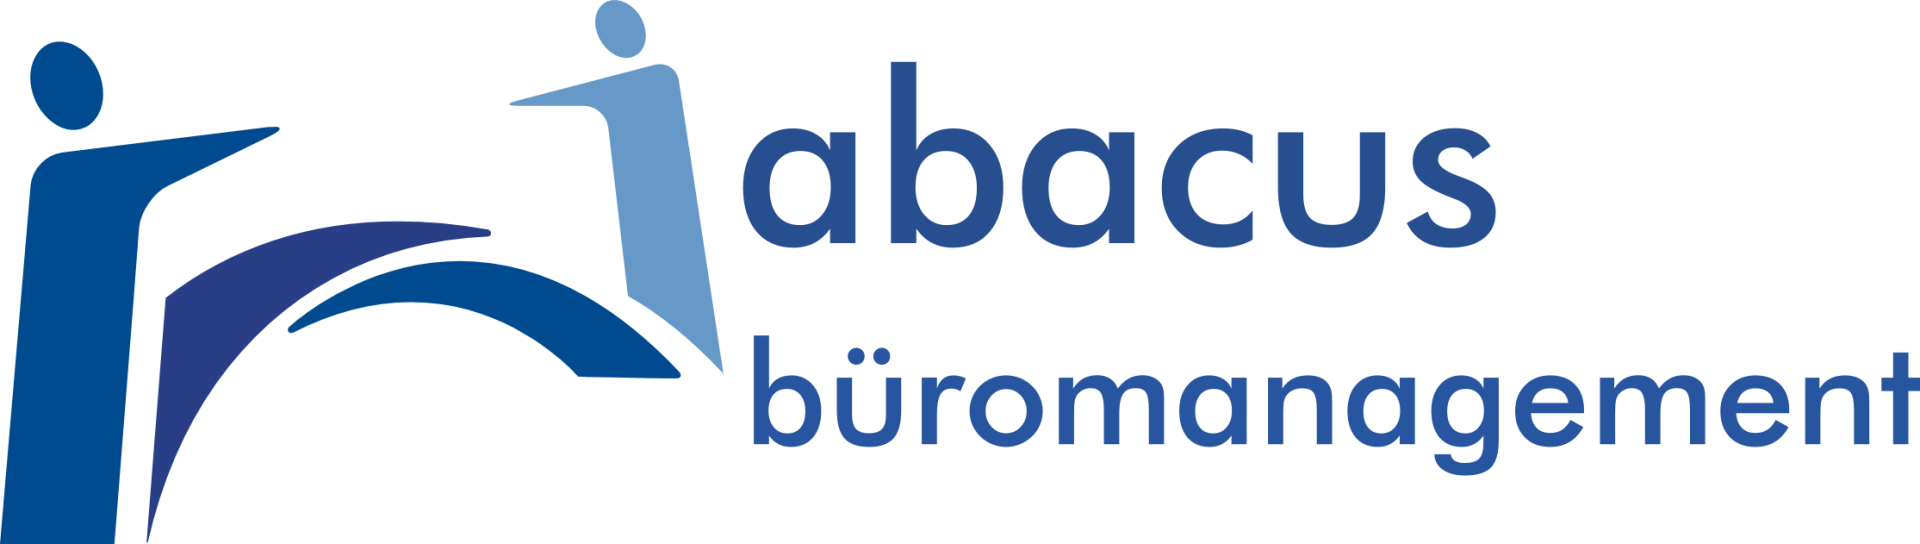 Firma-abacus-Logo